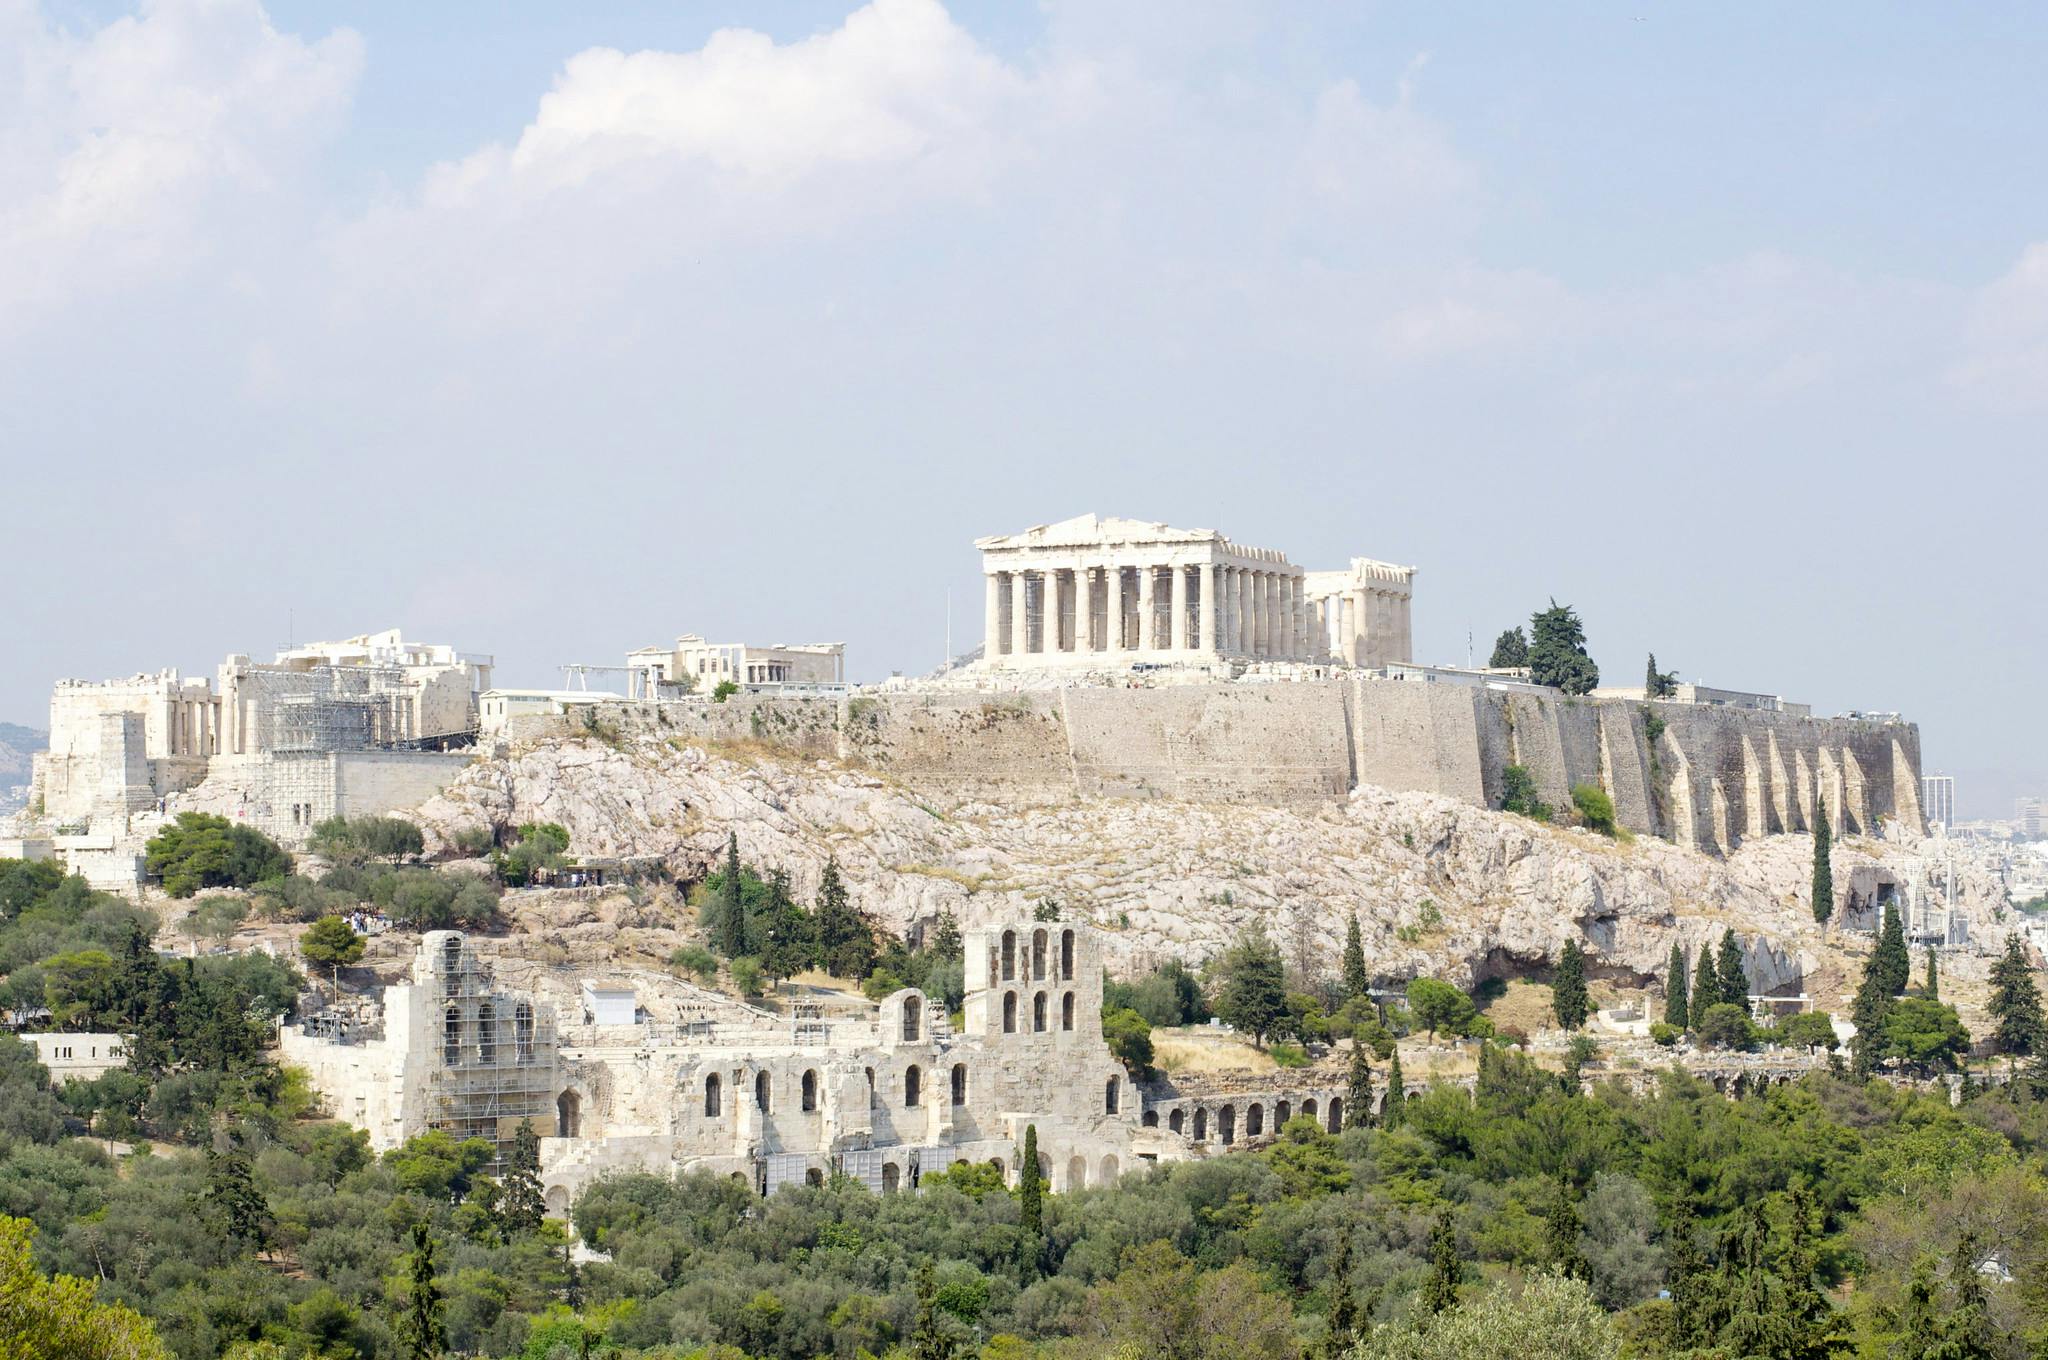 Acropolis Citadel (by Aleksandr Zykov on Flickr)
